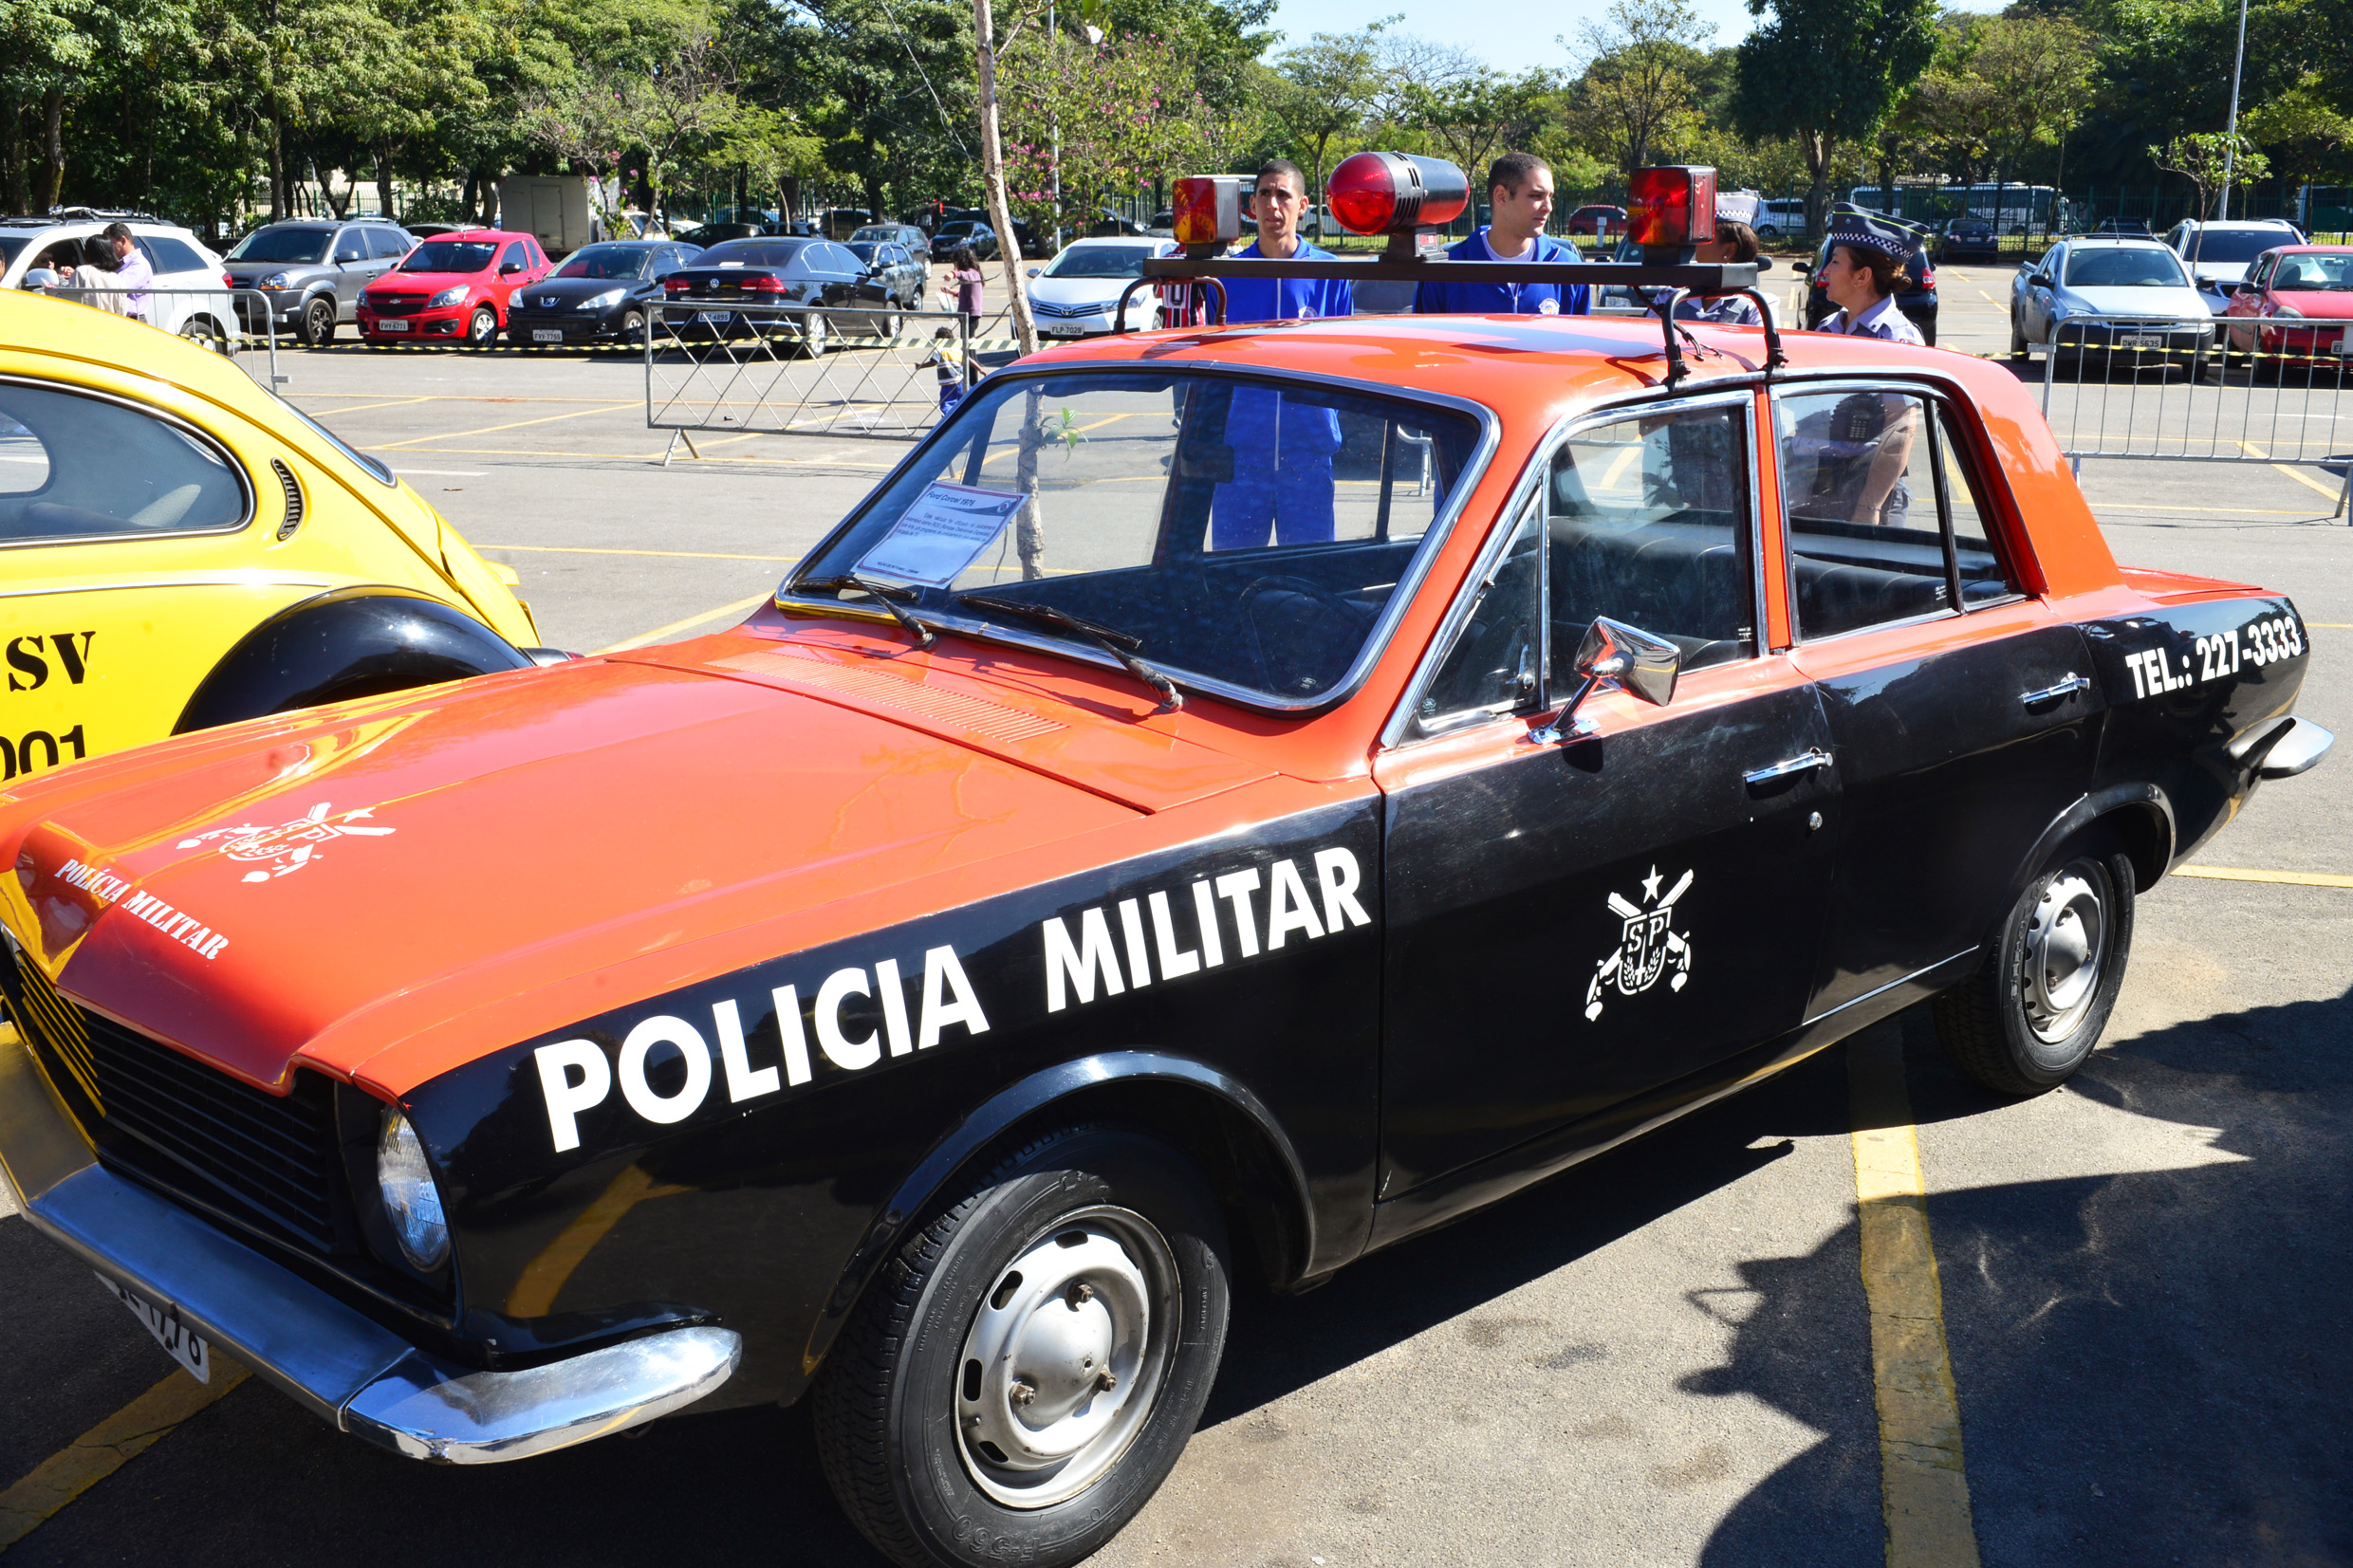 Veculo histrico da Polcia Militar <a style='float:right;color:#ccc' href='https://www3.al.sp.gov.br/repositorio/noticia/N-06-2015/fg172552.jpg' target=_blank><i class='bi bi-zoom-in'></i> Clique para ver a imagem </a>